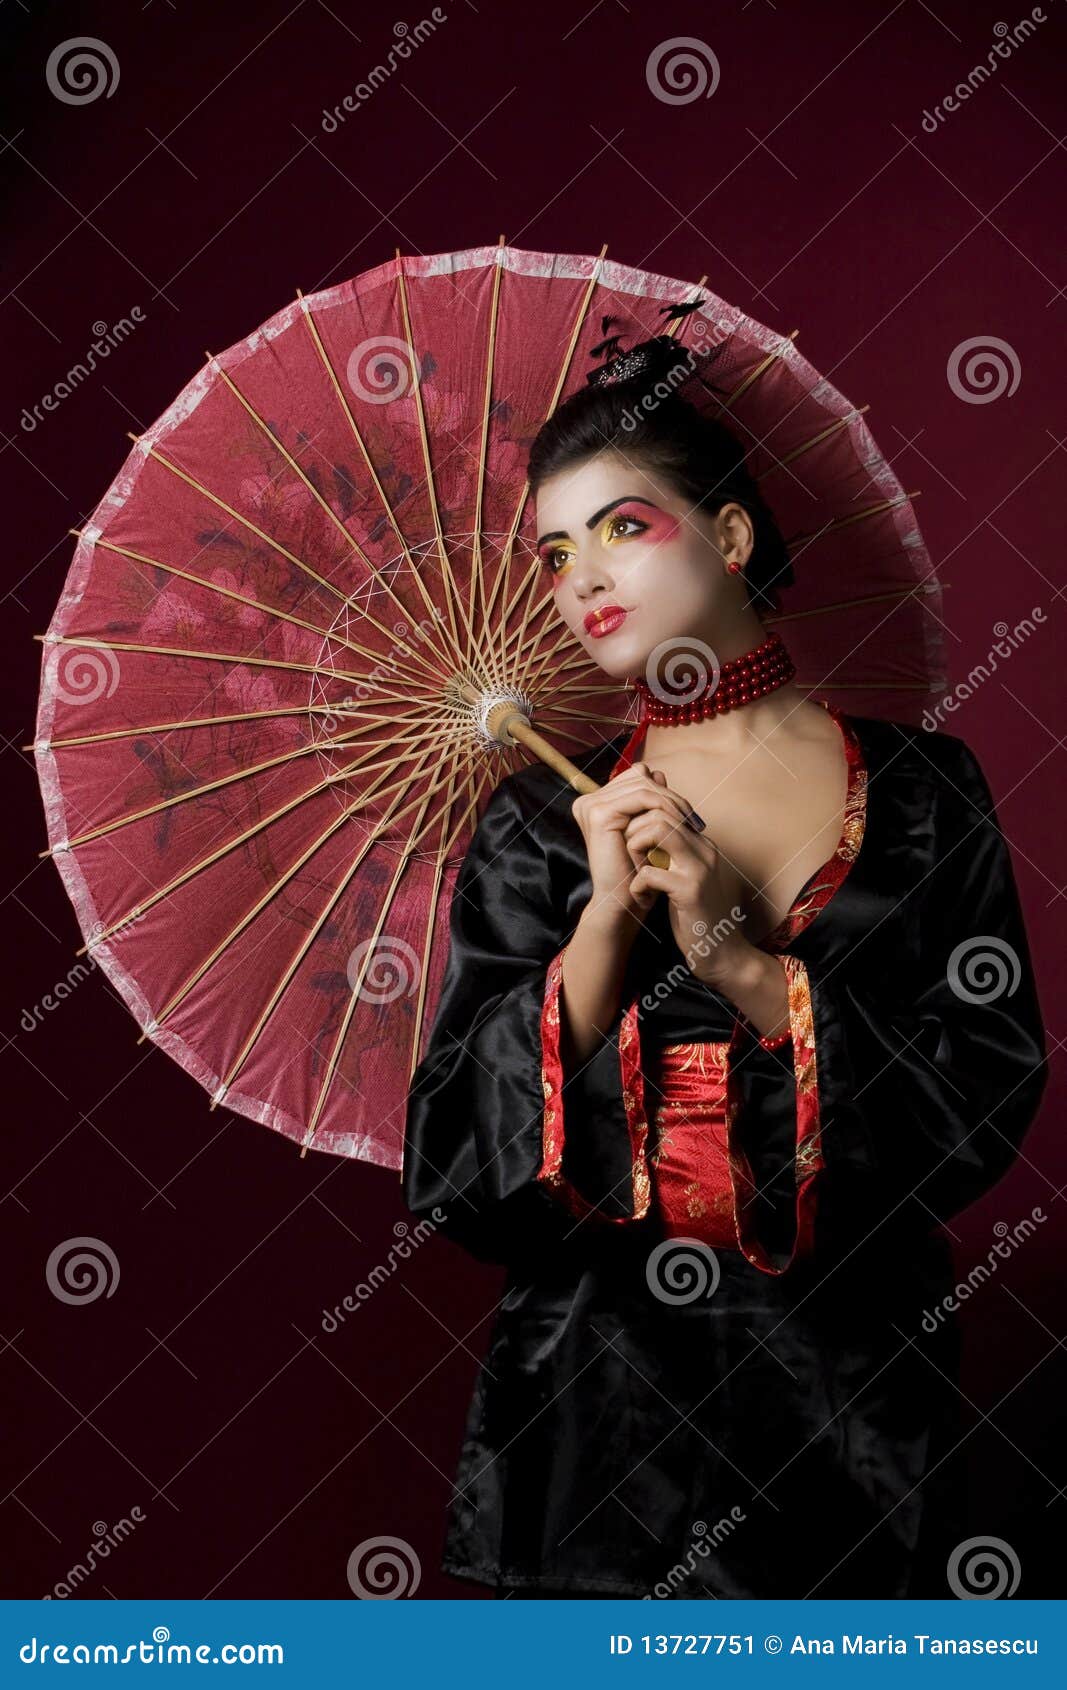 451 Geisha Looking Stock Photos